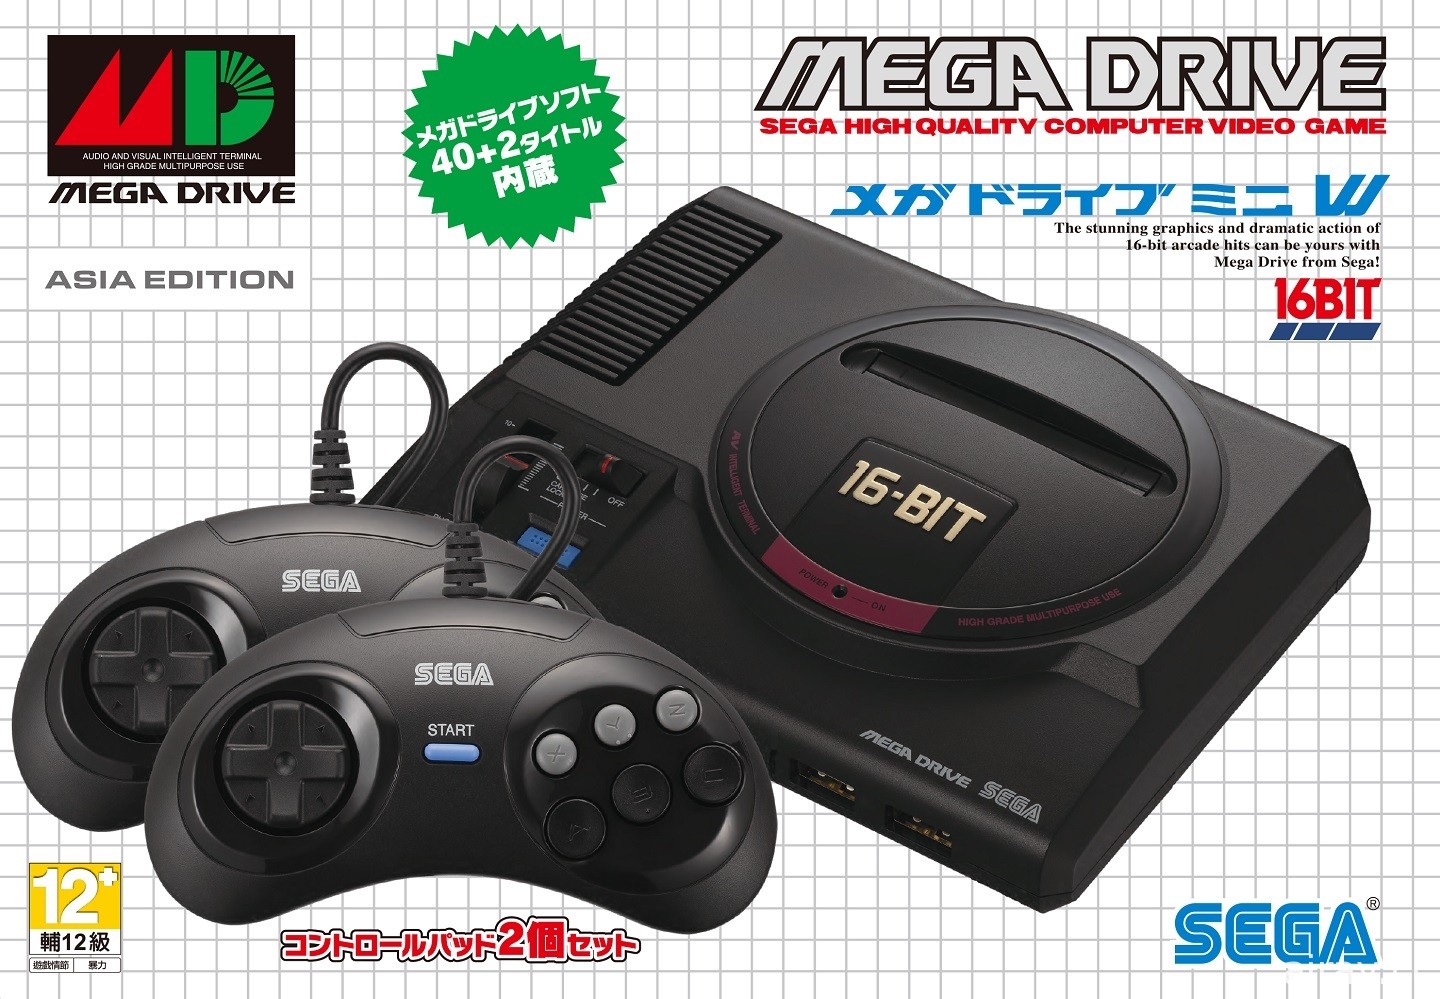 SEGA 宣布 60 周年特别赠奖活动 9 月活动赠品为“Mega Drive Mini”